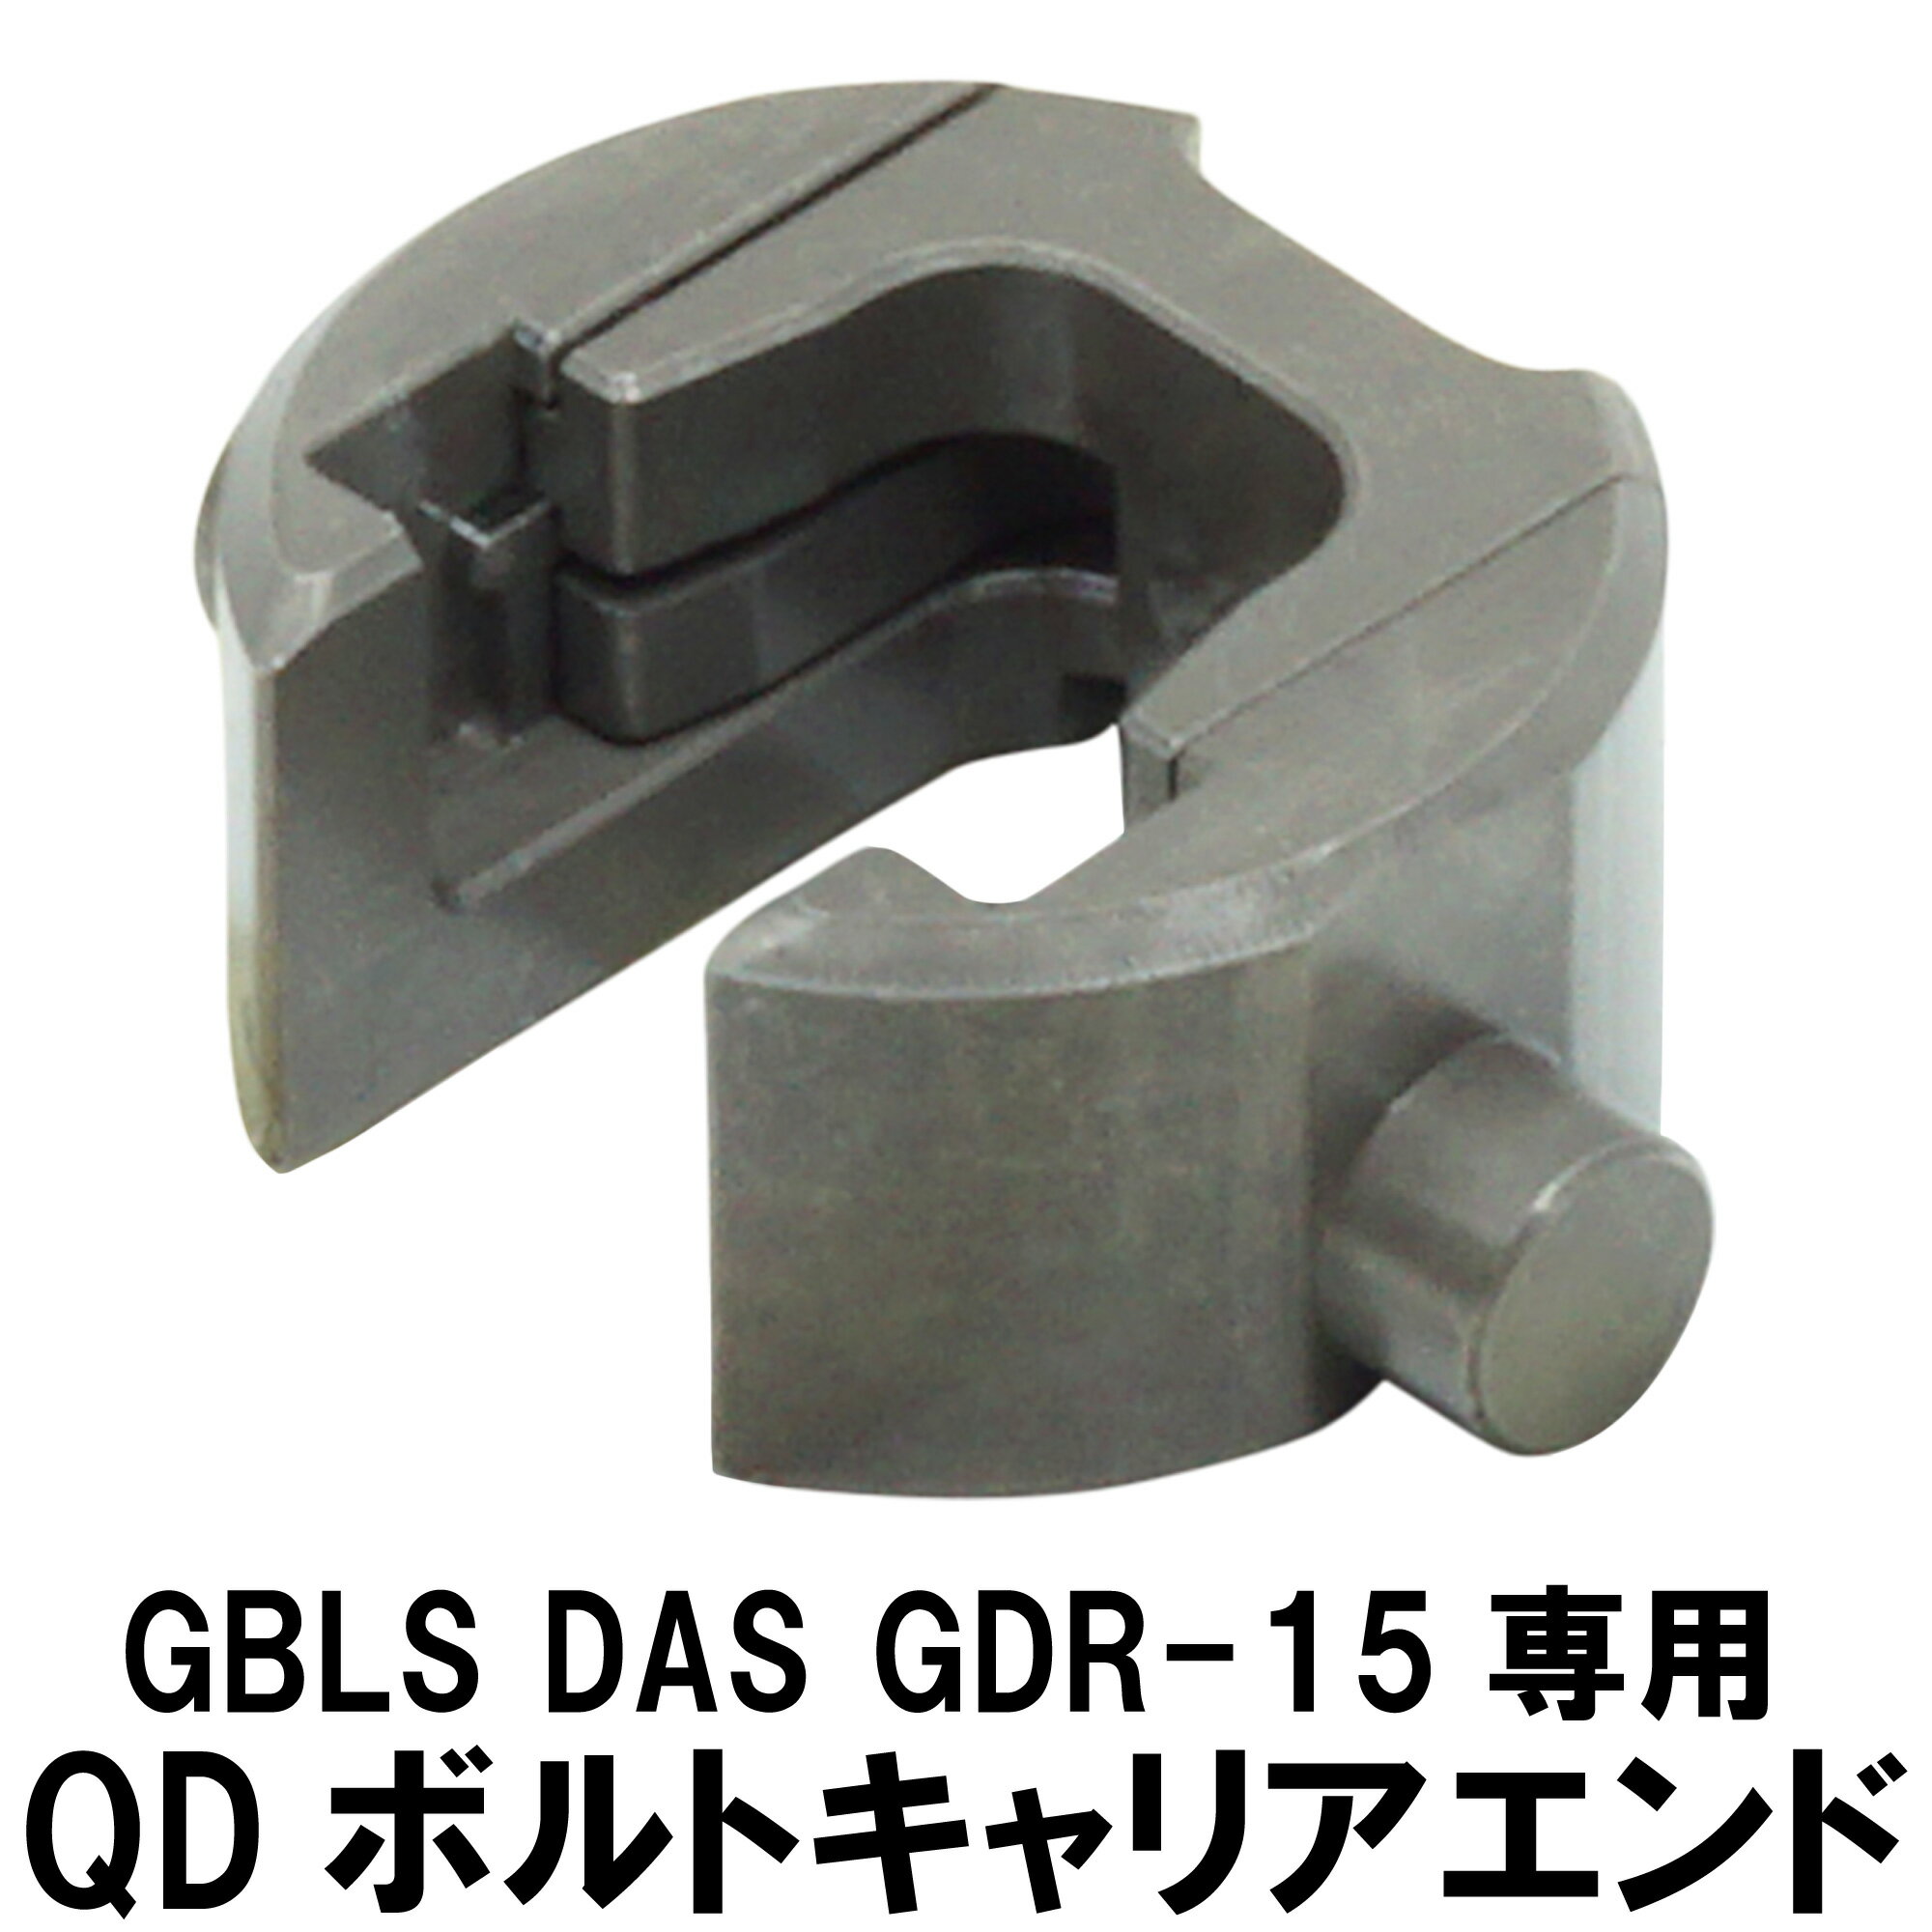 DCI Guns QDボルトキャリアエンド GBLS DAS GDR-15 用 エアガン エアーガン カスタム サバゲー サバイバルゲーム サバイバル パーツ カスタムパーツ メンテナンス